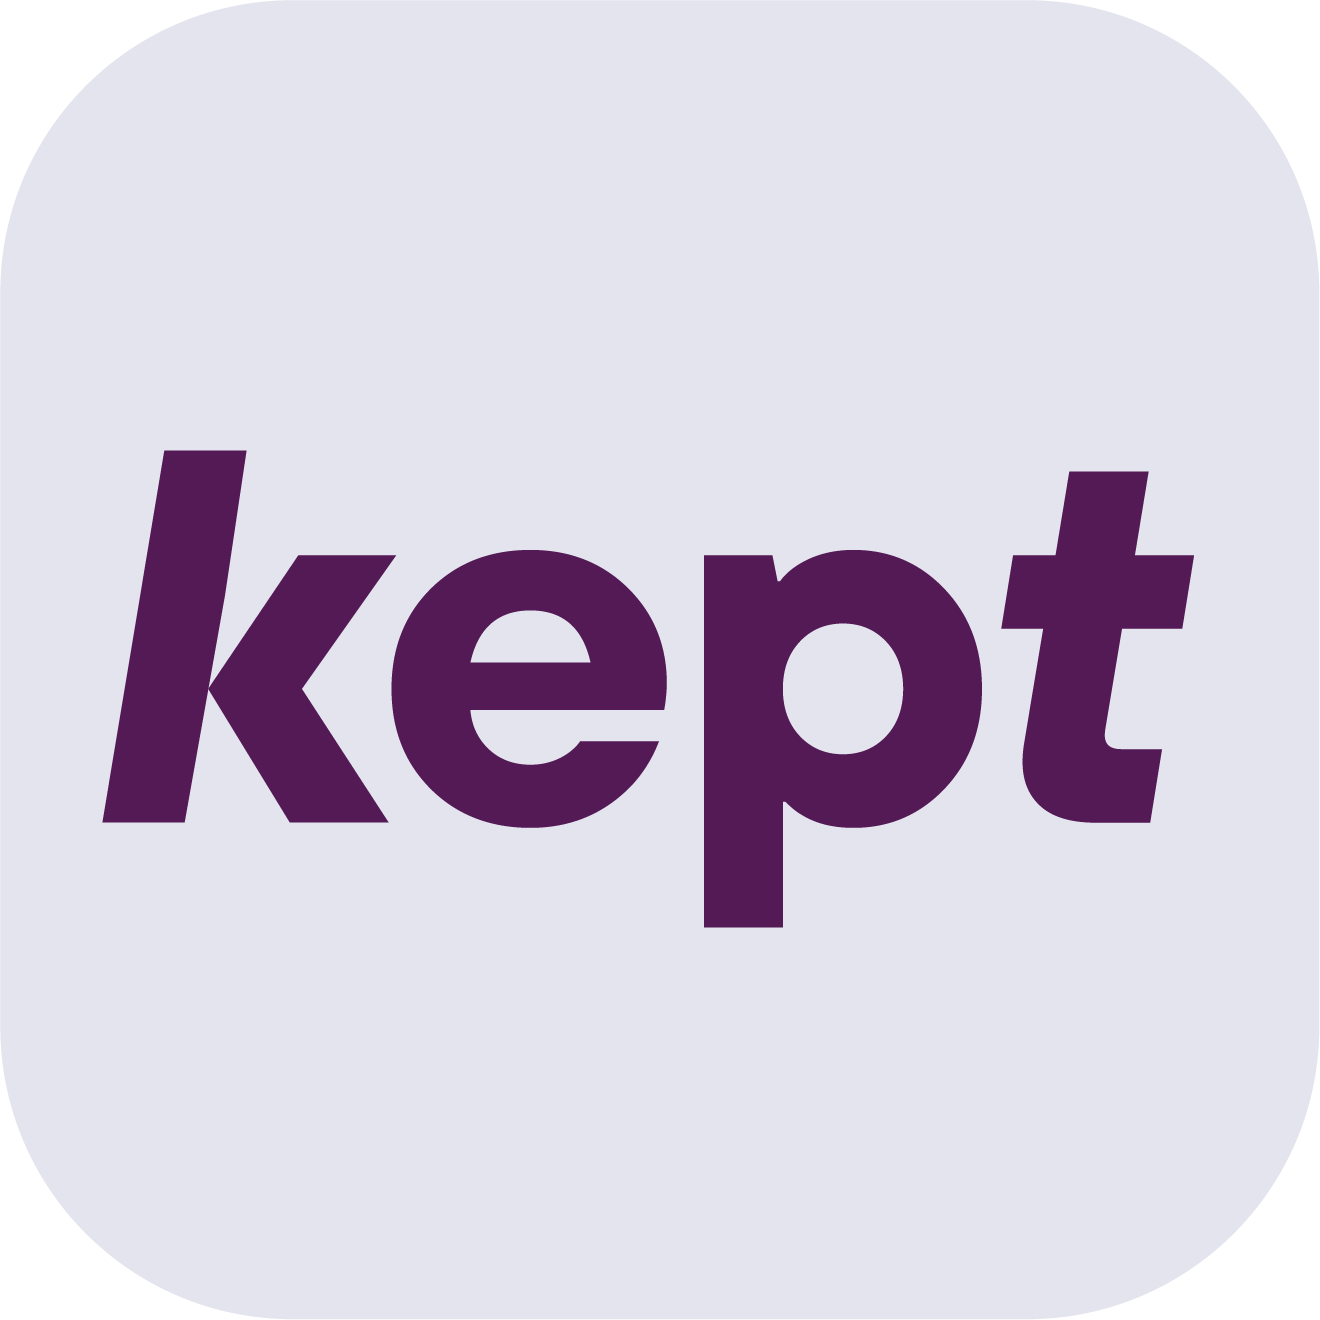 Логотип компании «Kept»